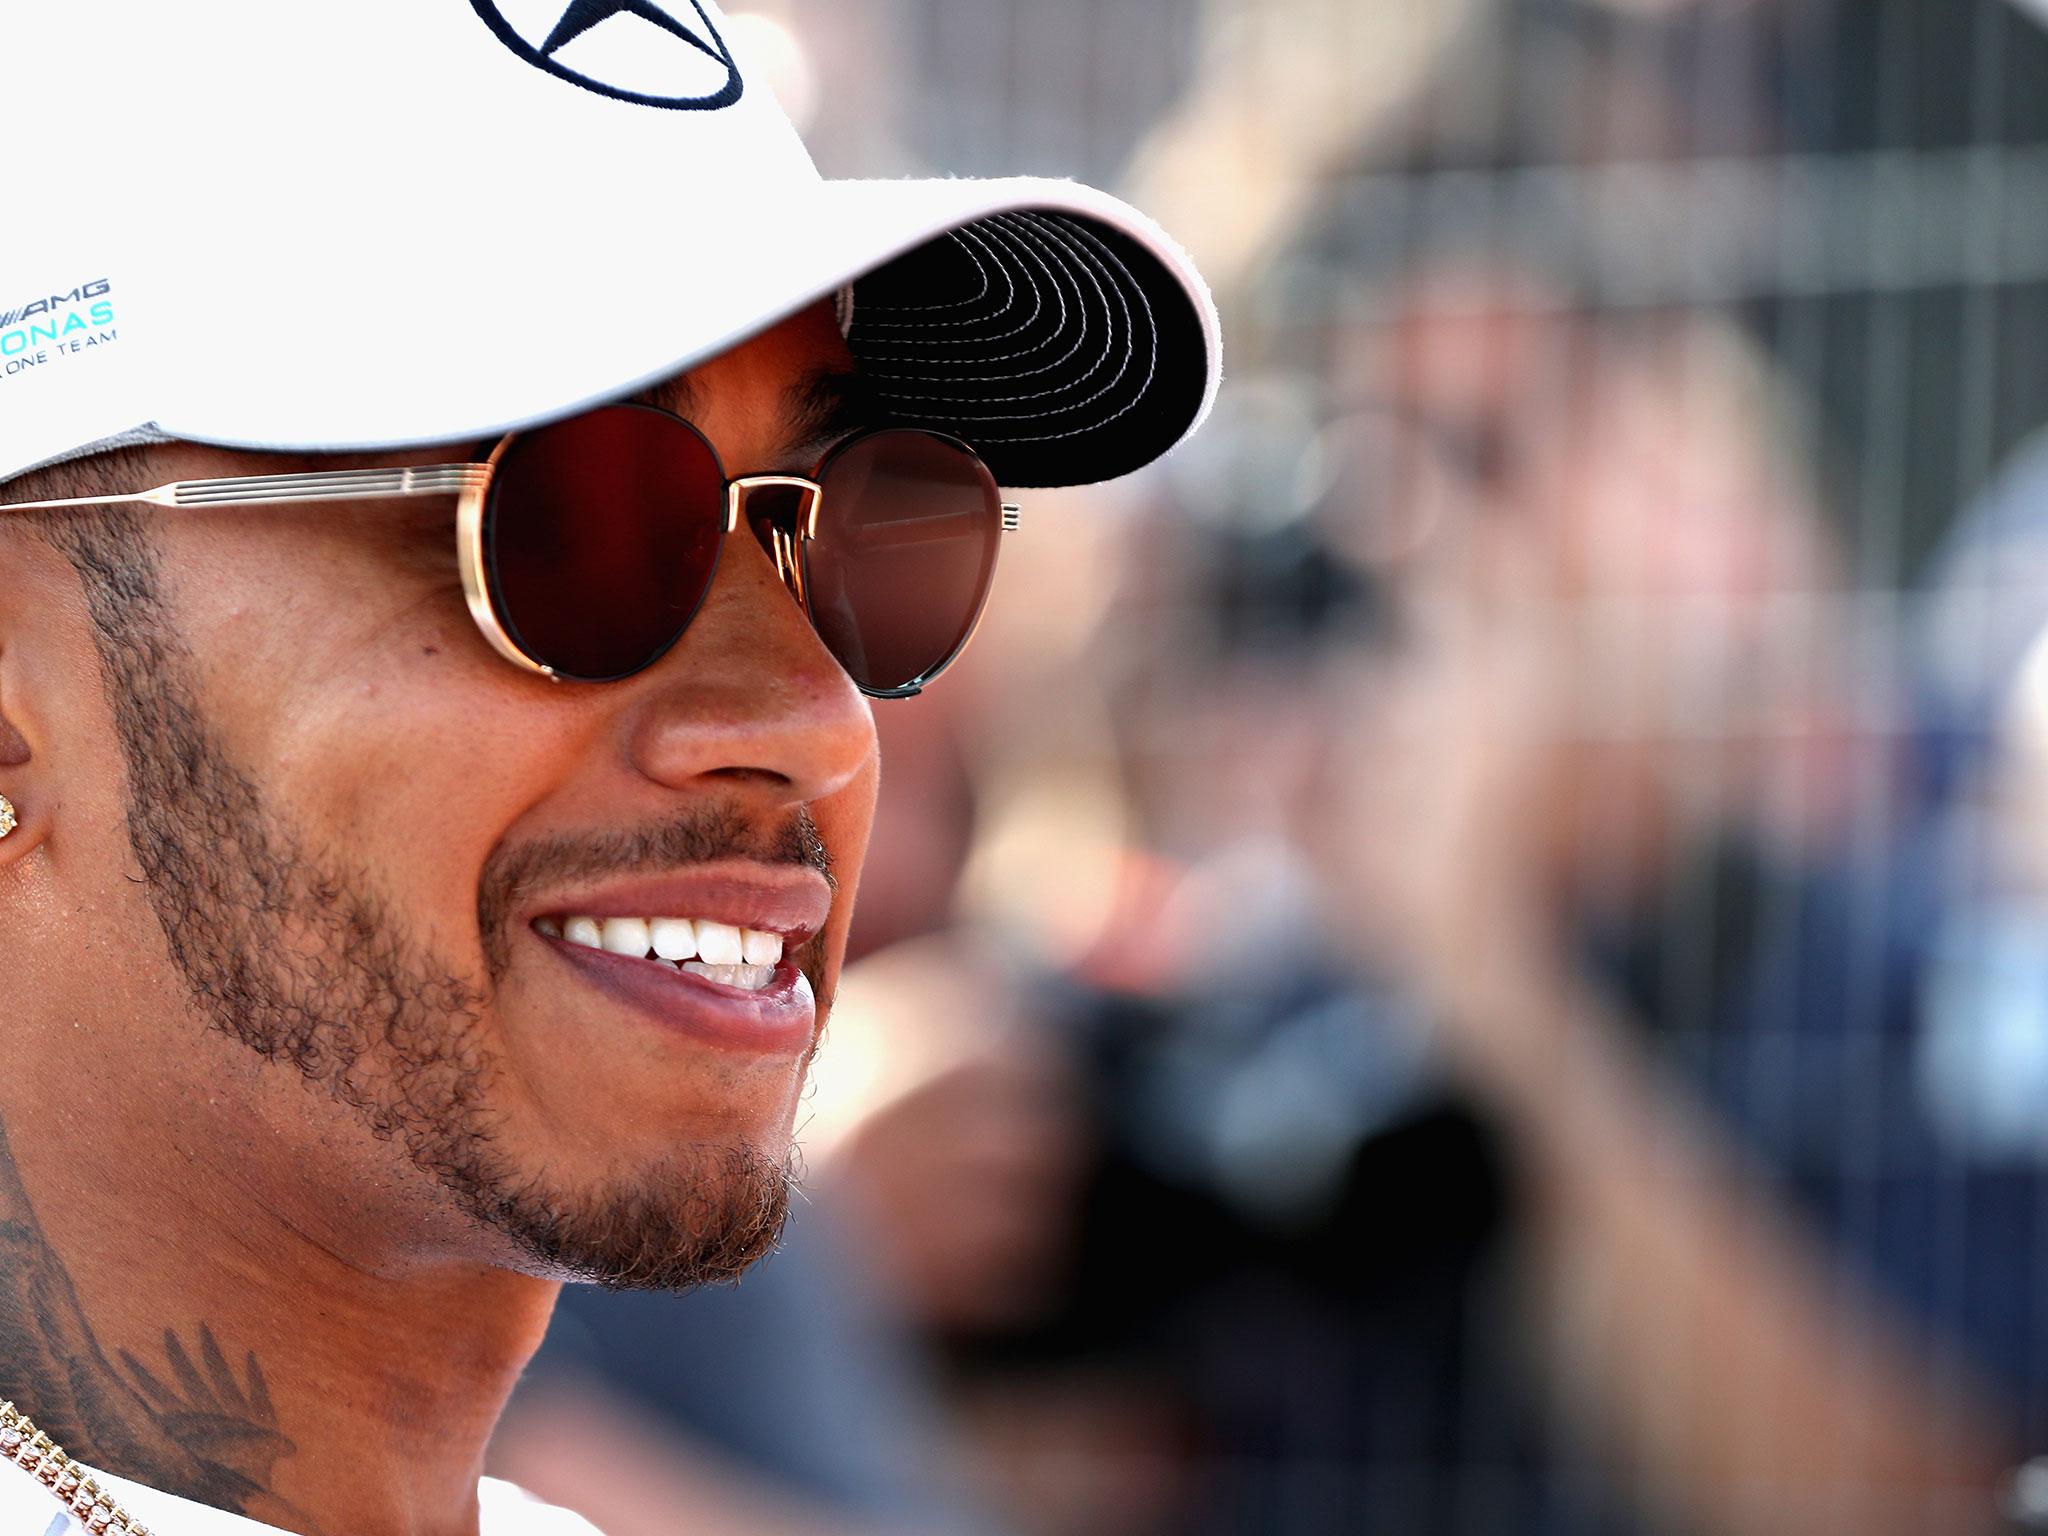 Lewis Hamilton said it was good to be back